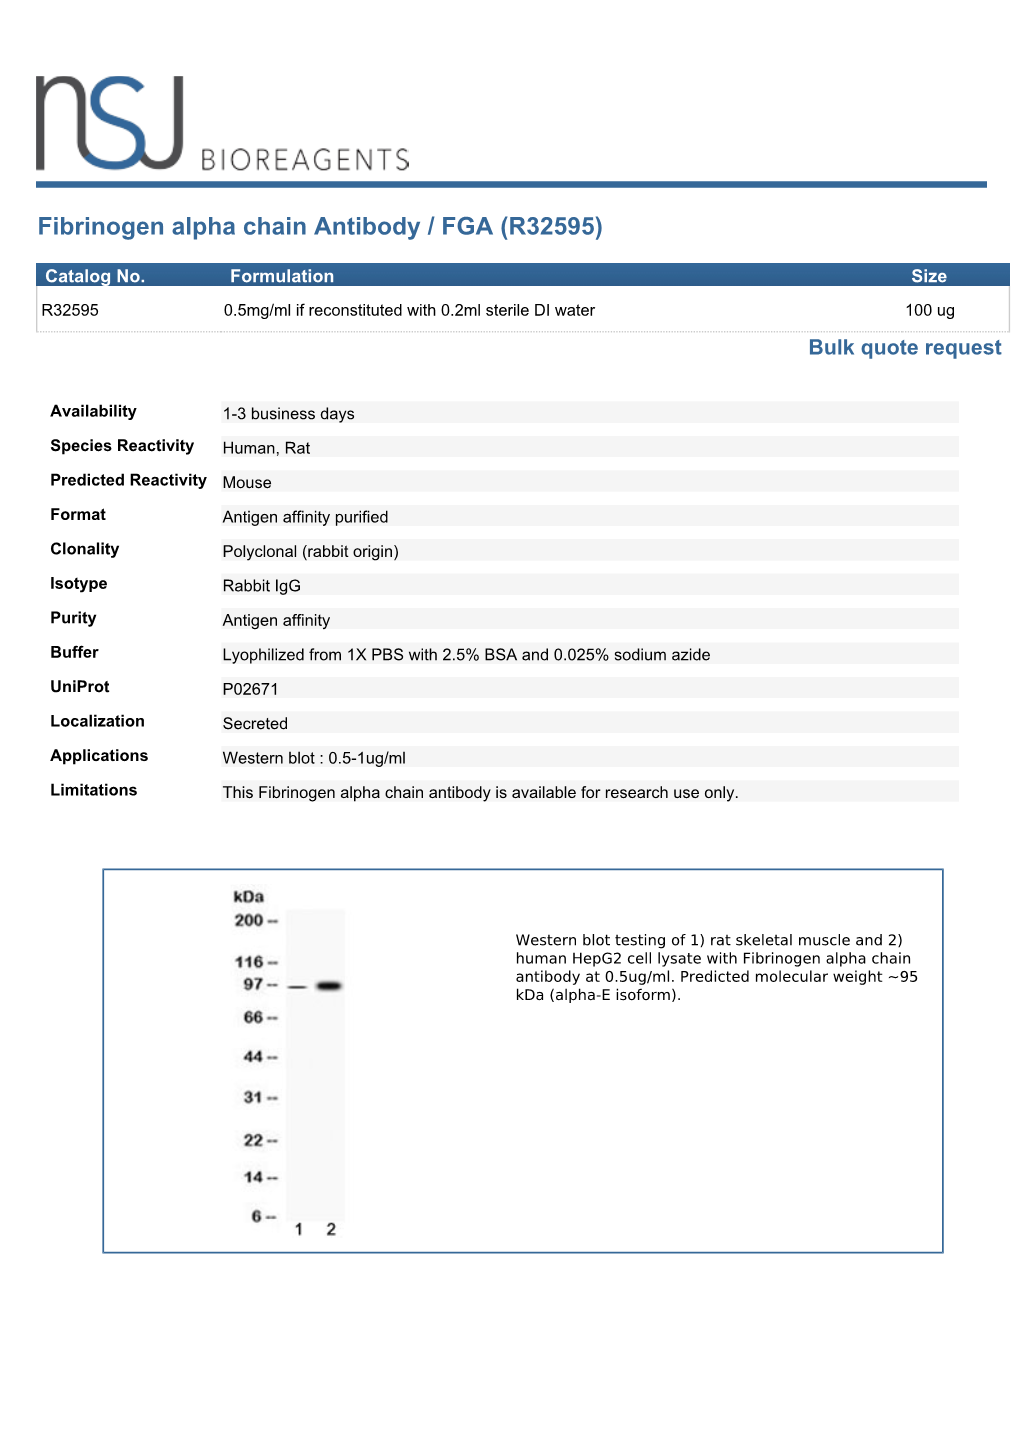 Fibrinogen Alpha Chain Antibody / FGA (R32595)